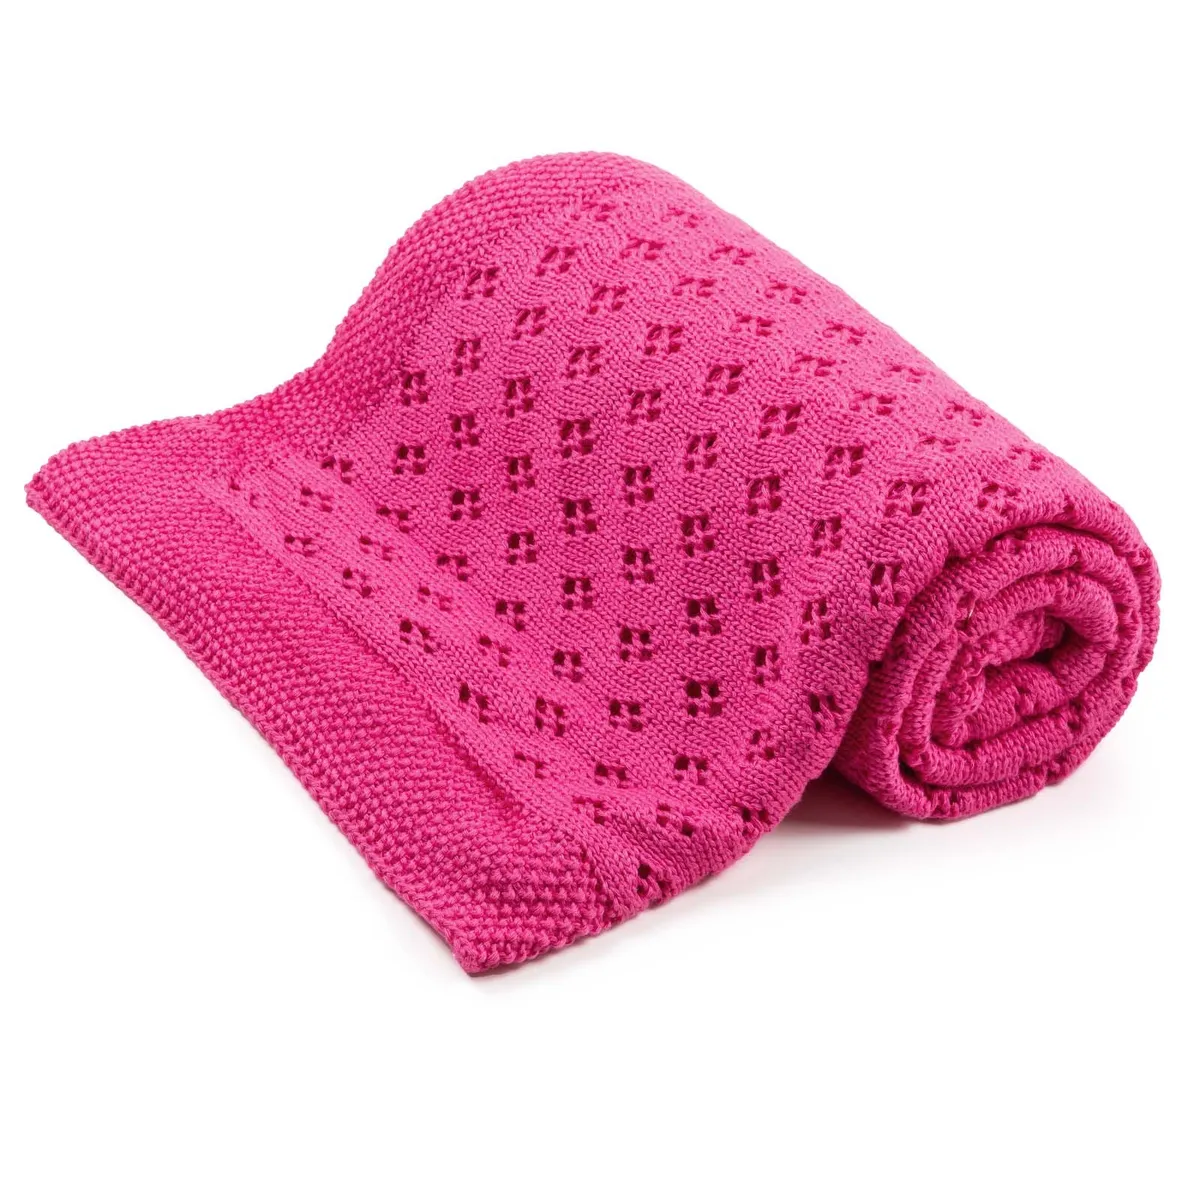 bamboo blanket openwork 100×80 cm mallow -pink 100% bamboo yarn